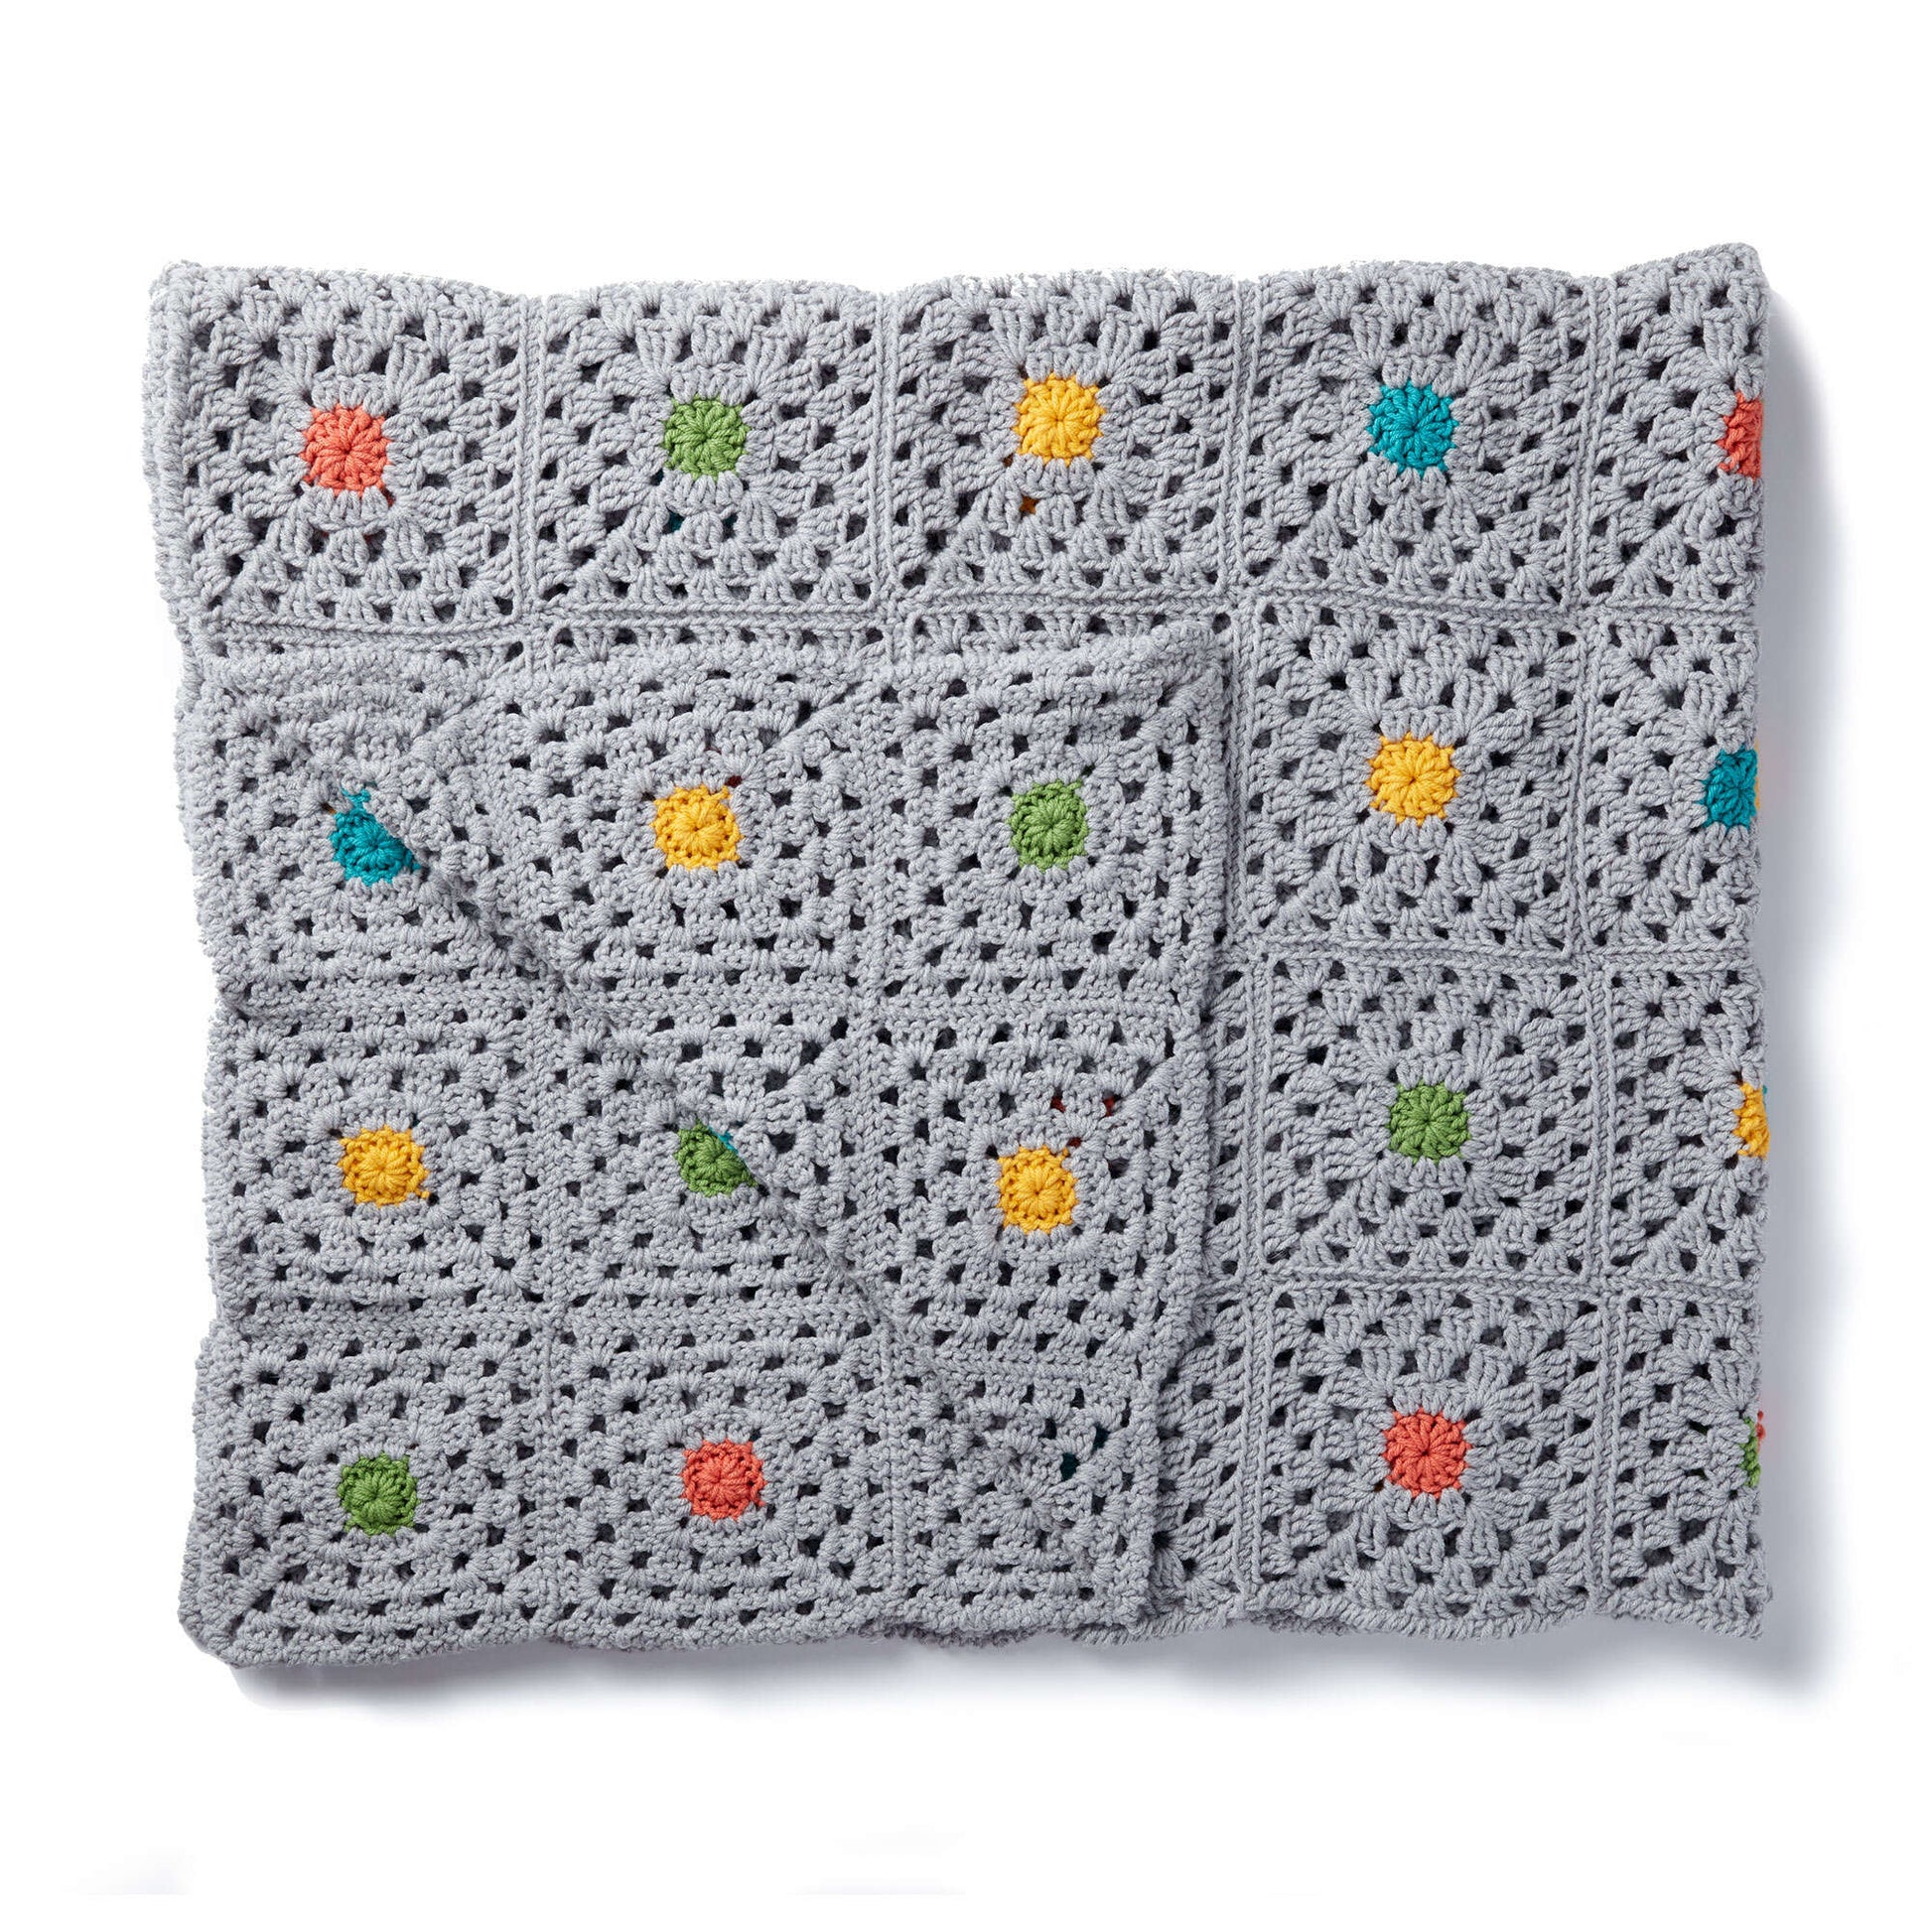 Caron Pin Point Crochet Blanket Single Size